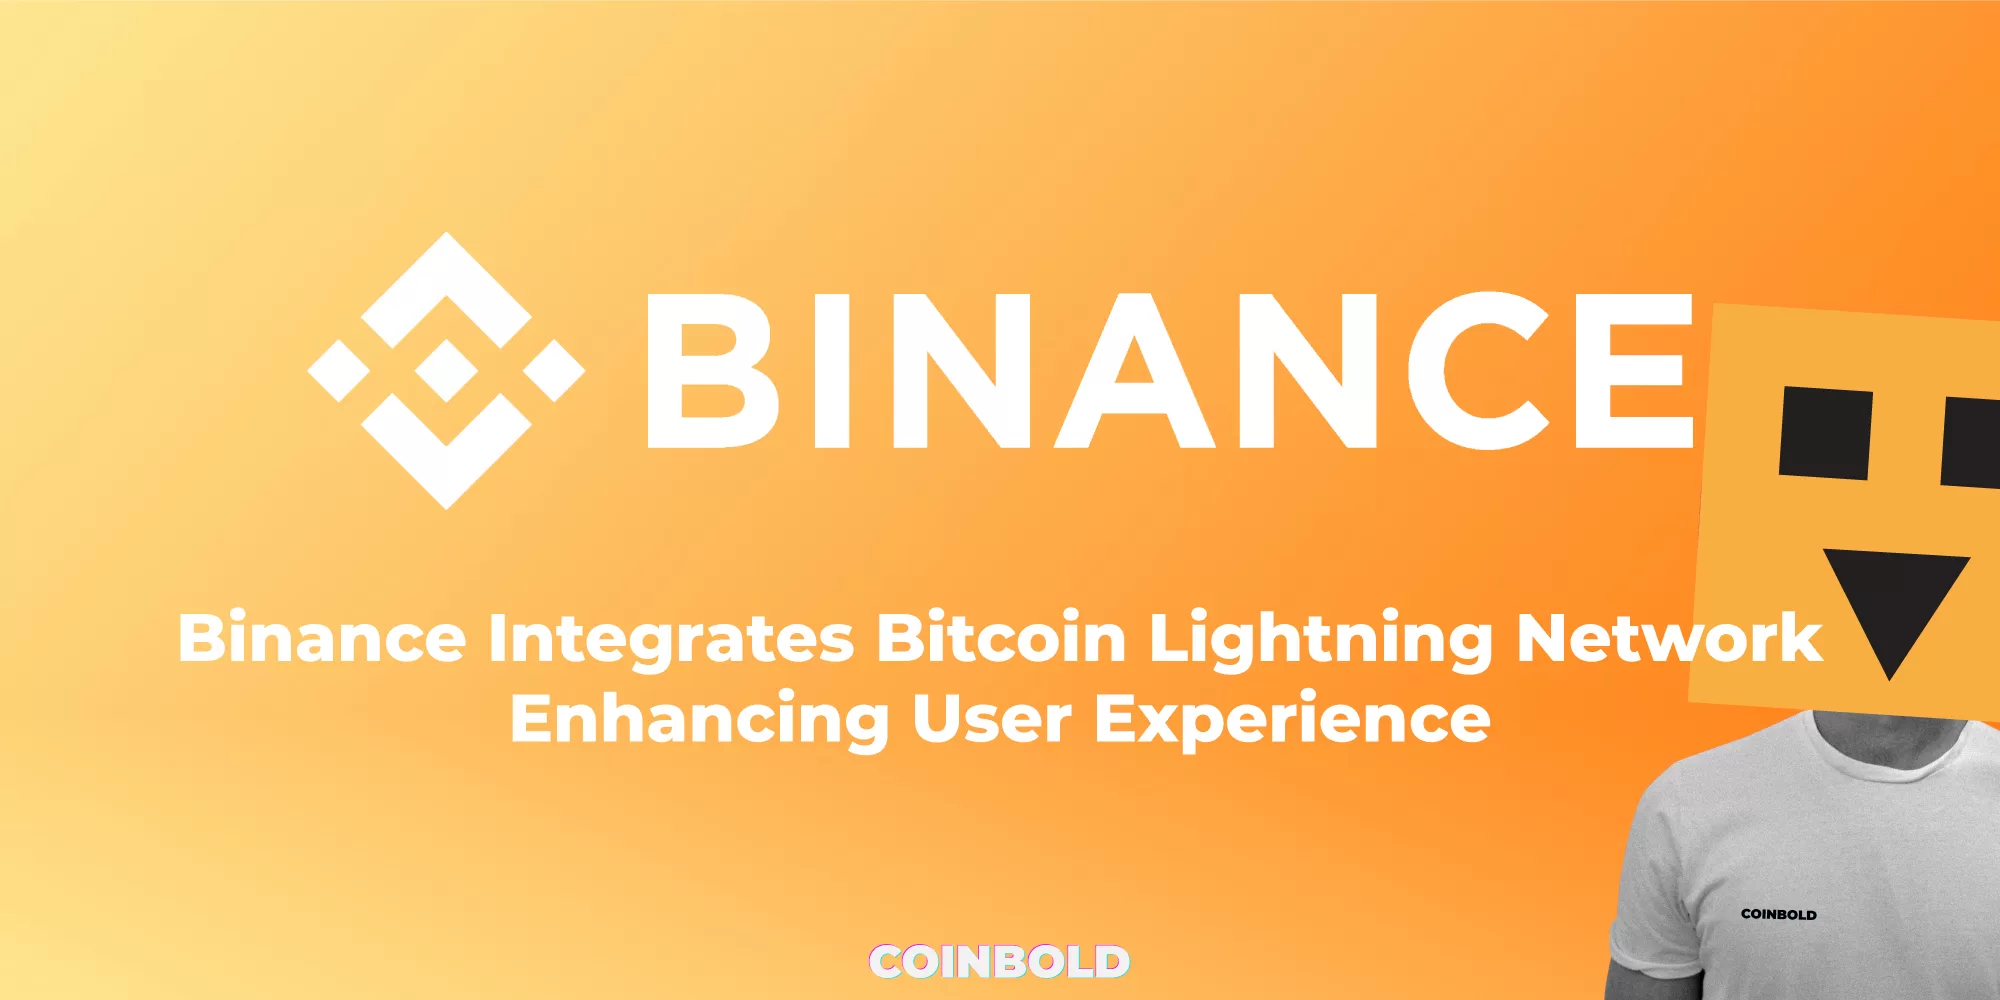 Binance Integrates Bitcoin Lightning Network, Enhancing User Experience